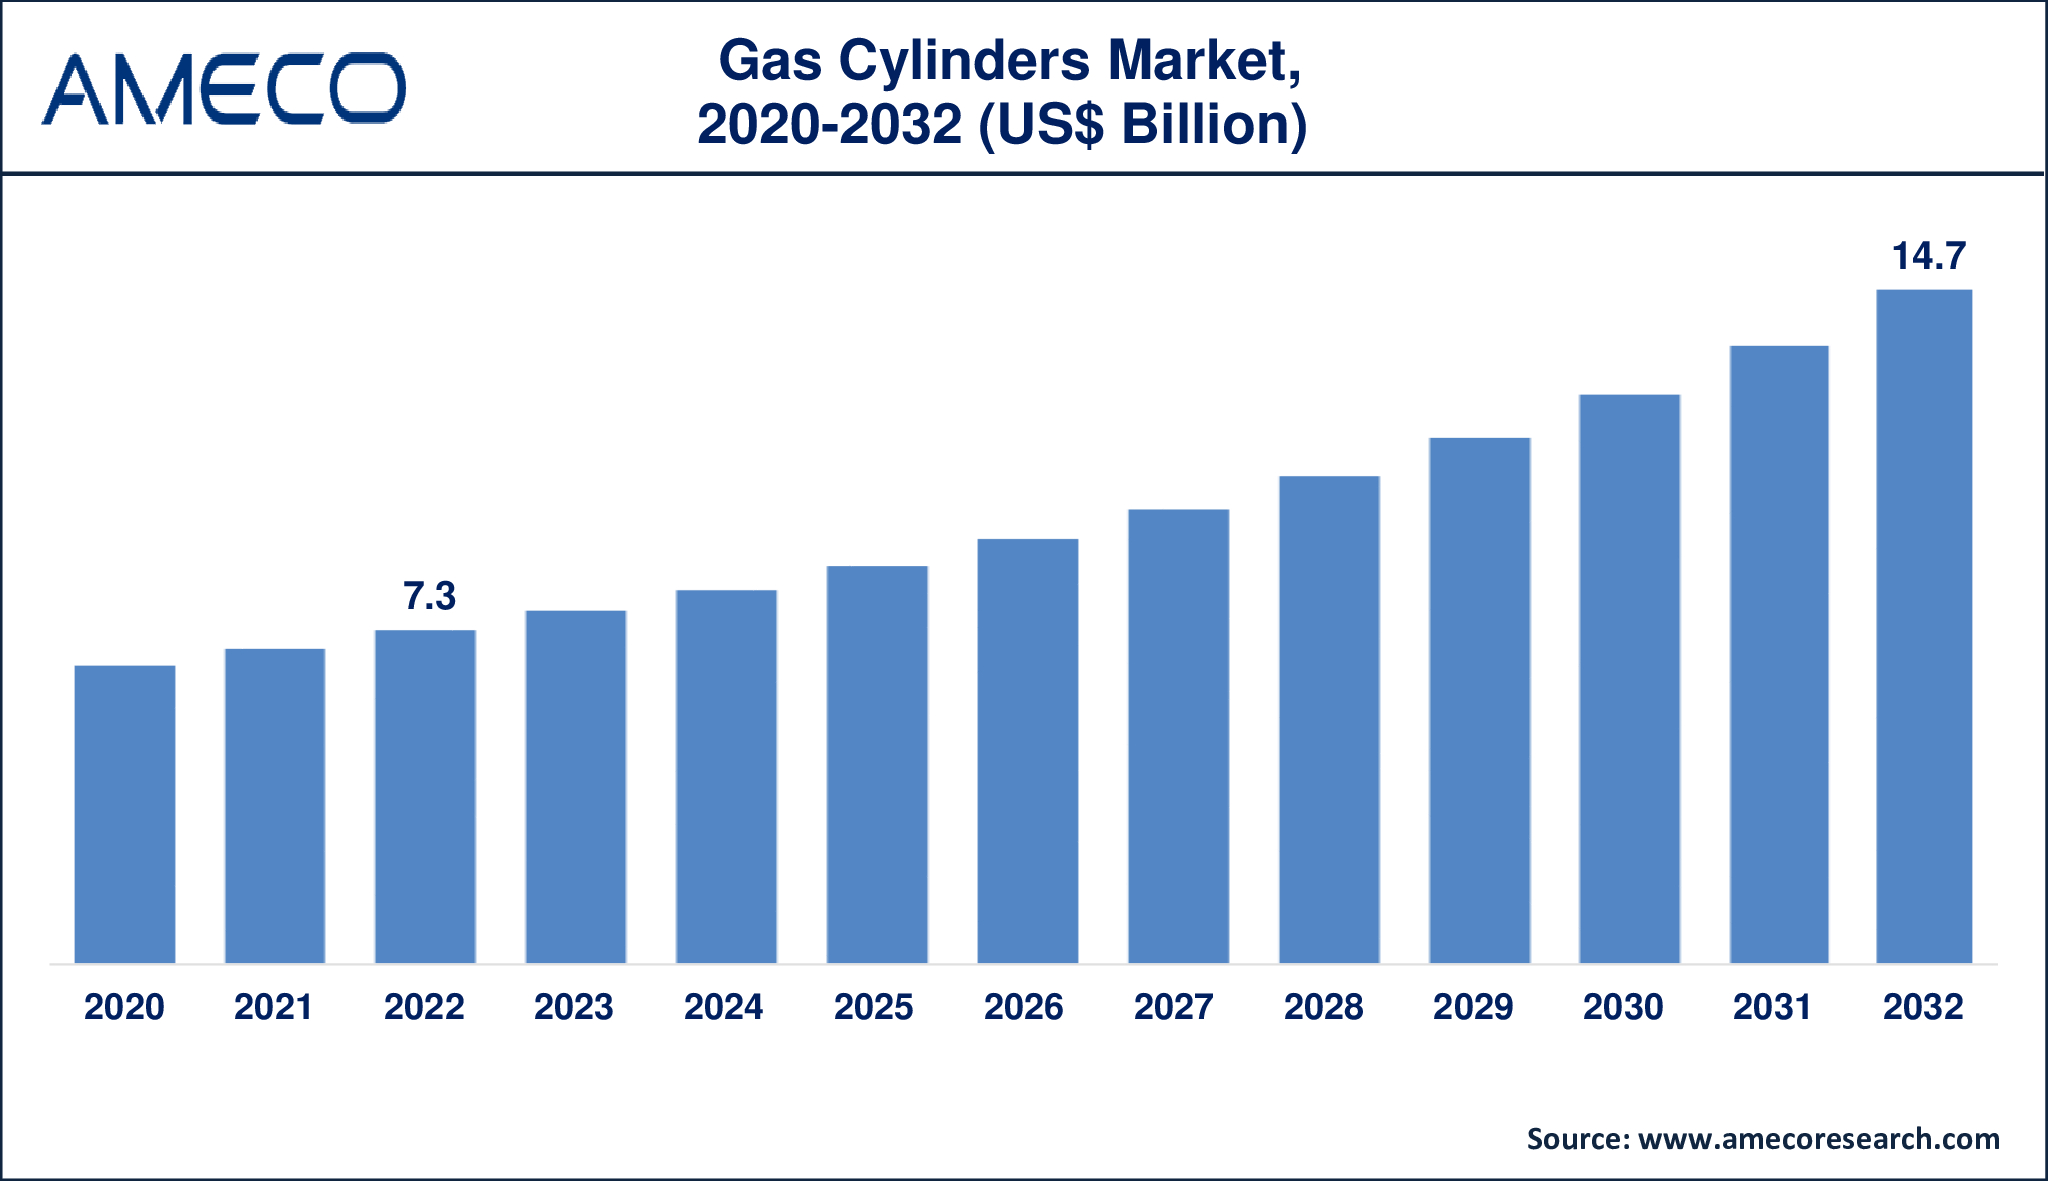 Gas Cylinders Market Dynamics